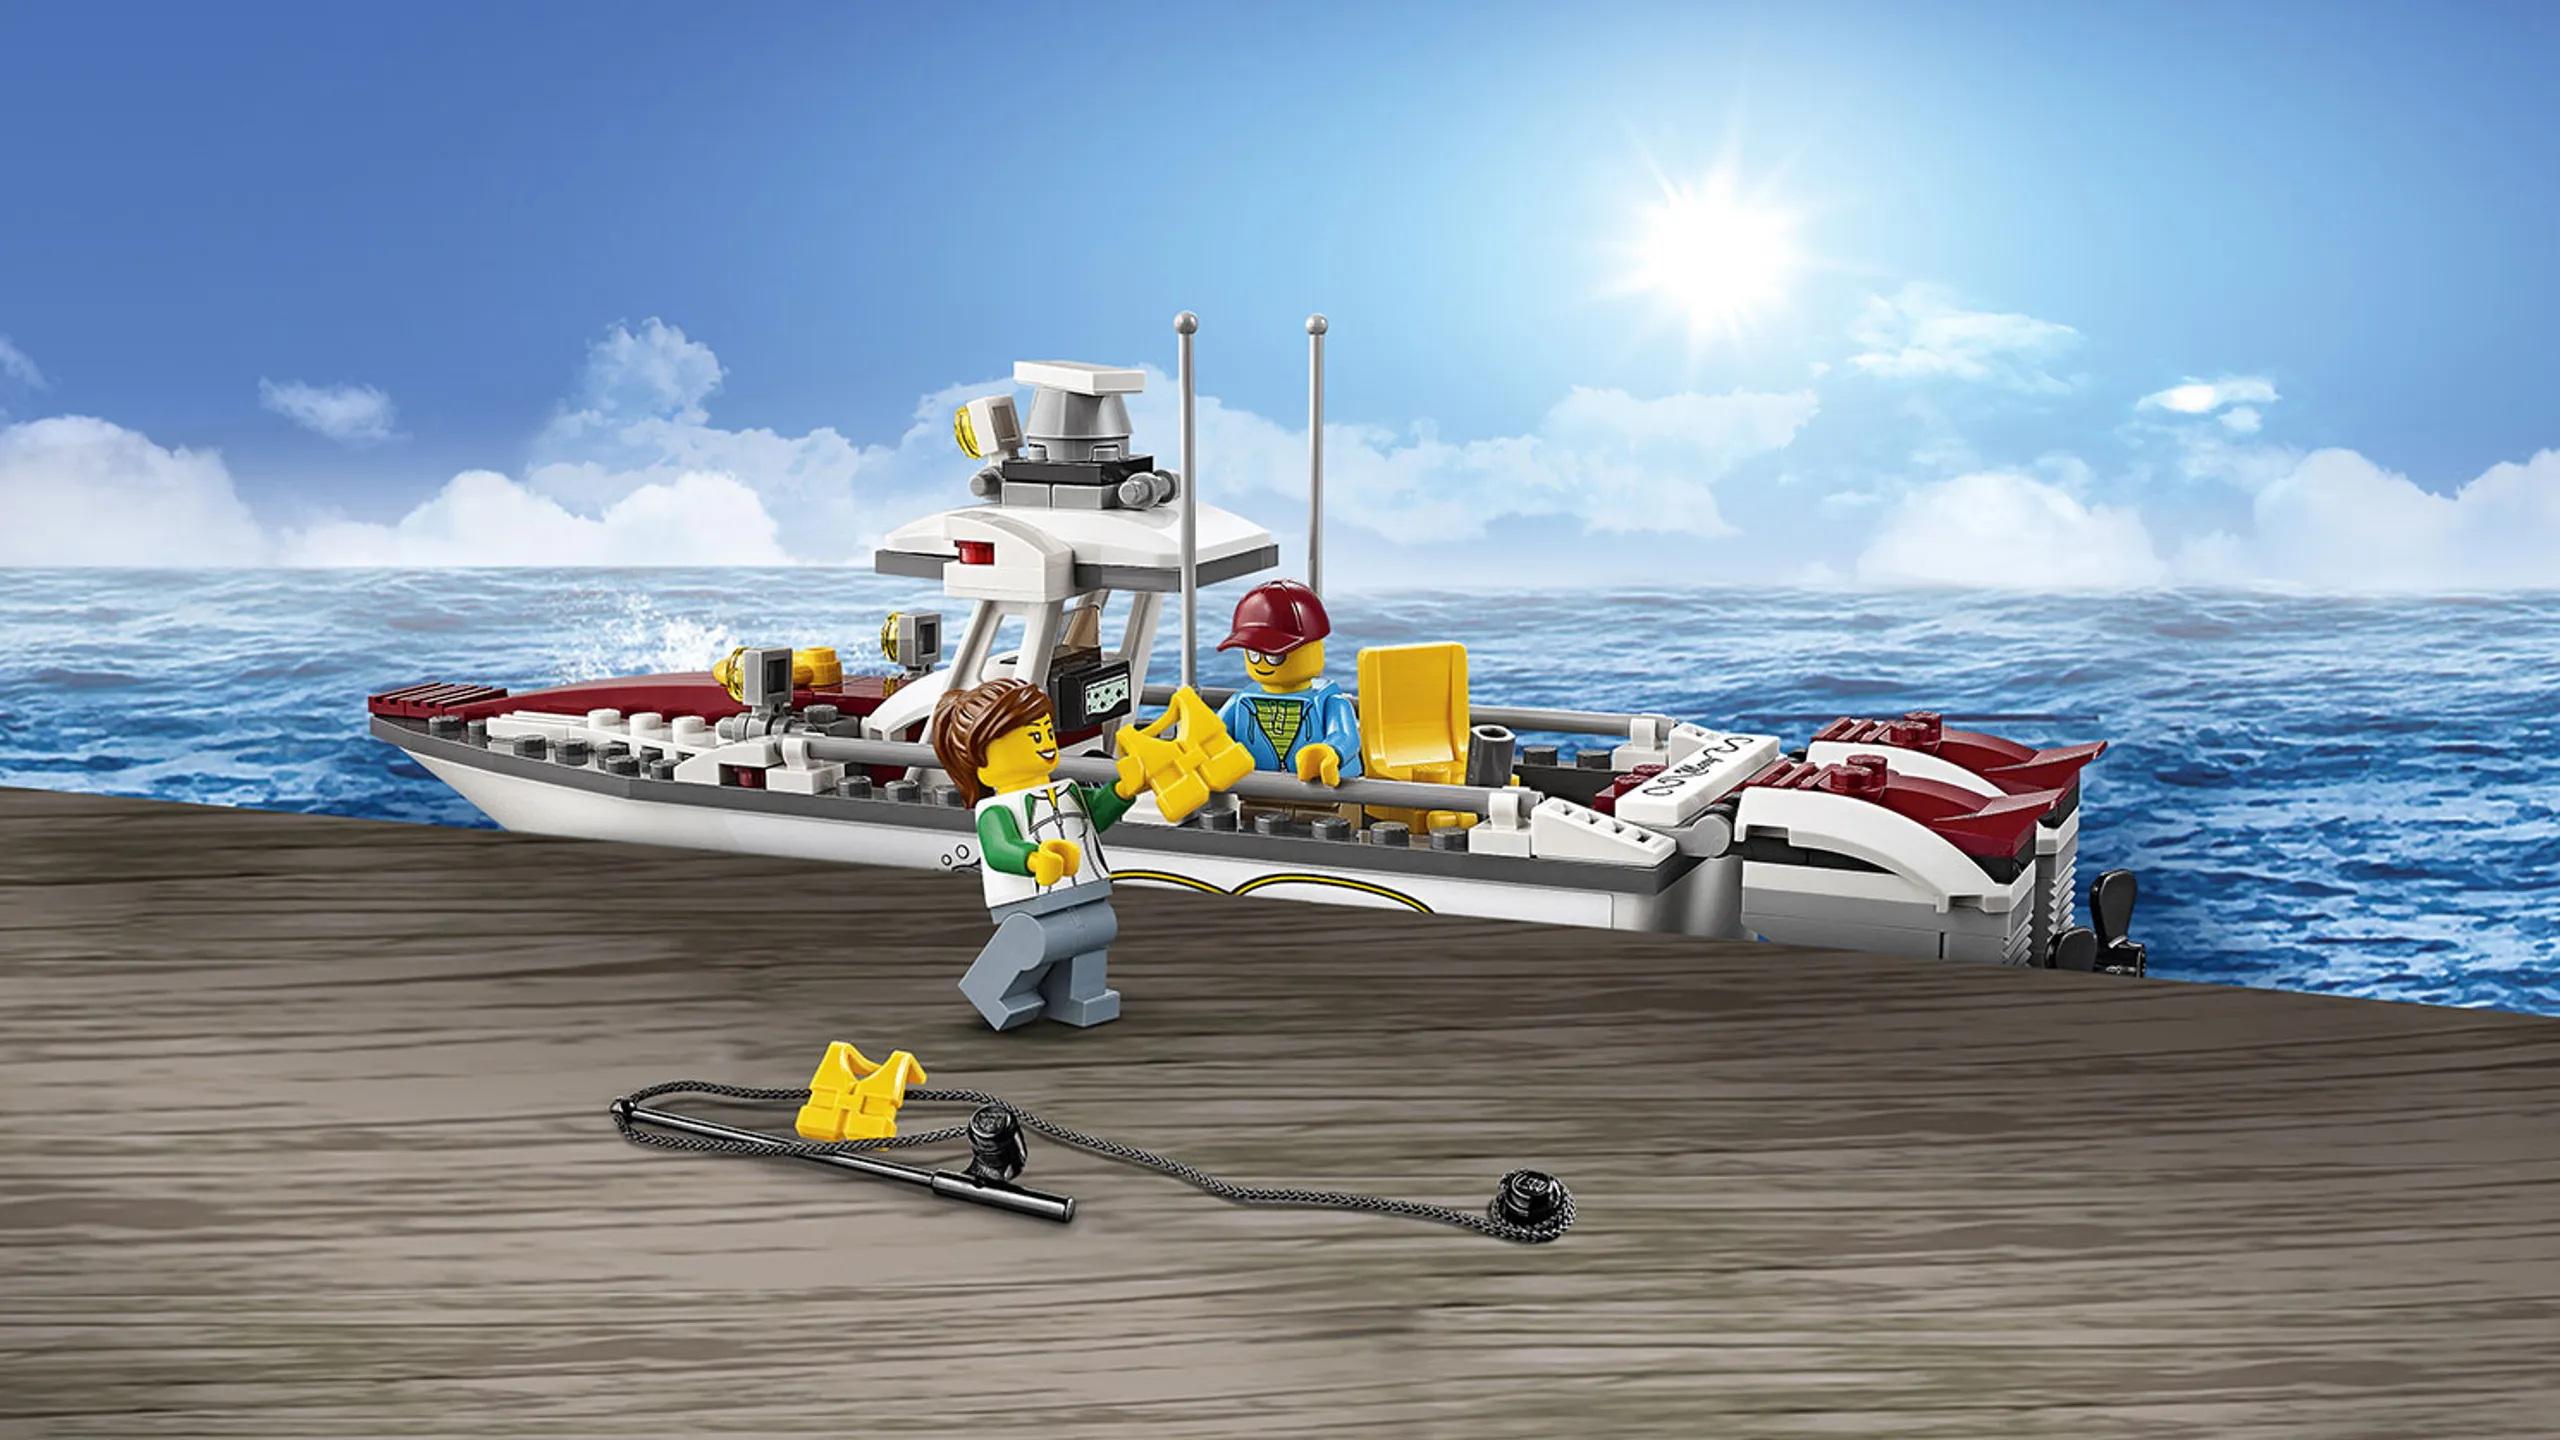 Fishing Boat - Videos - LEGO.com for kids